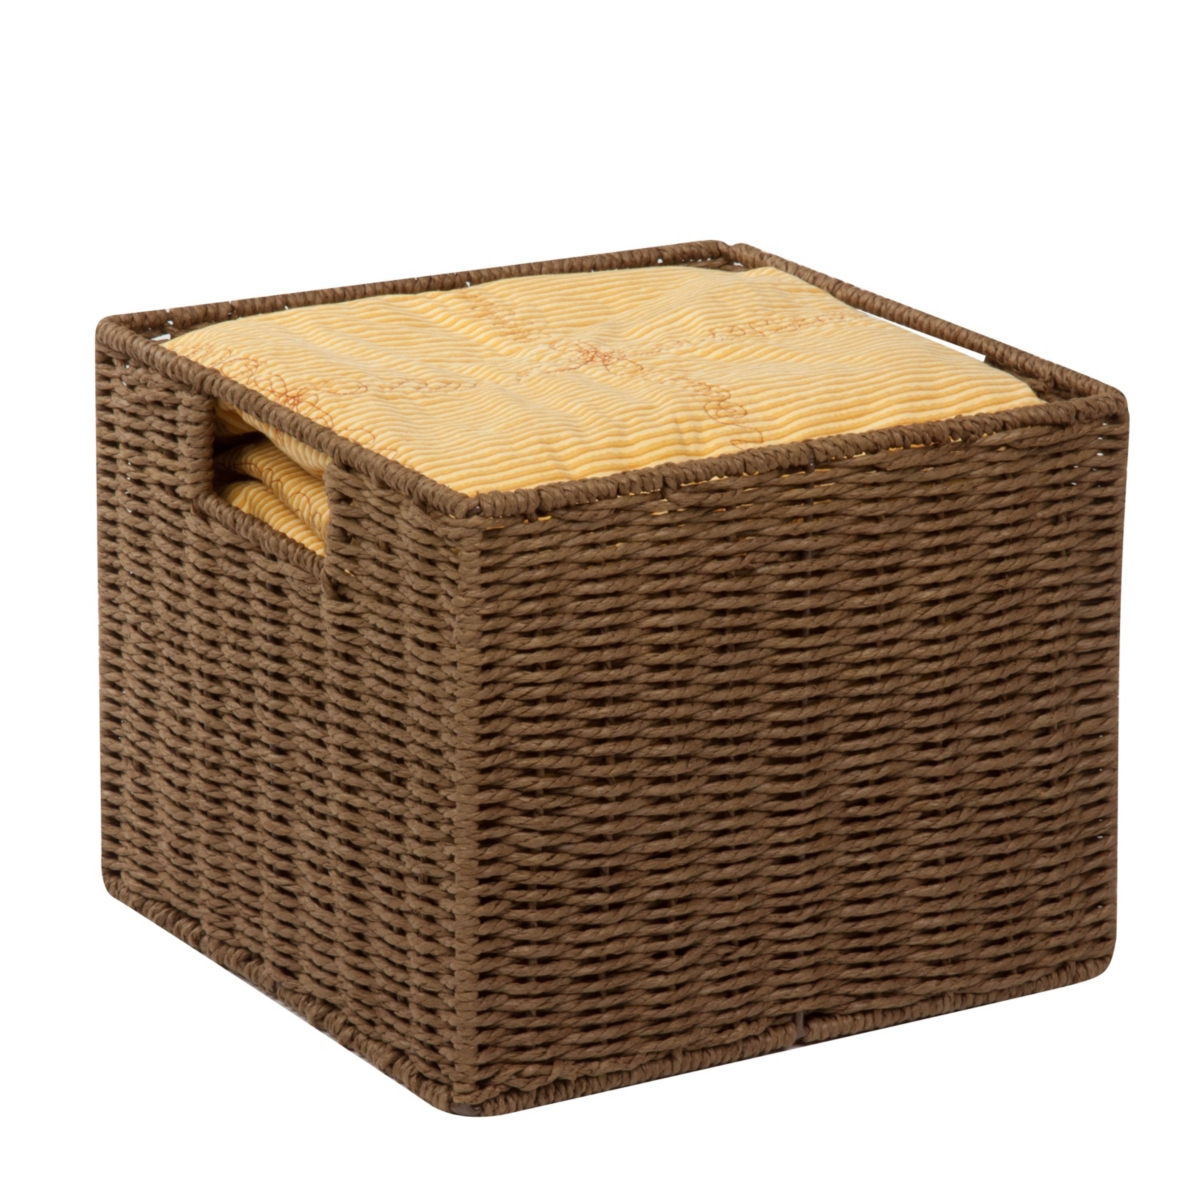 Parchment Cord Storage Basket - Brown